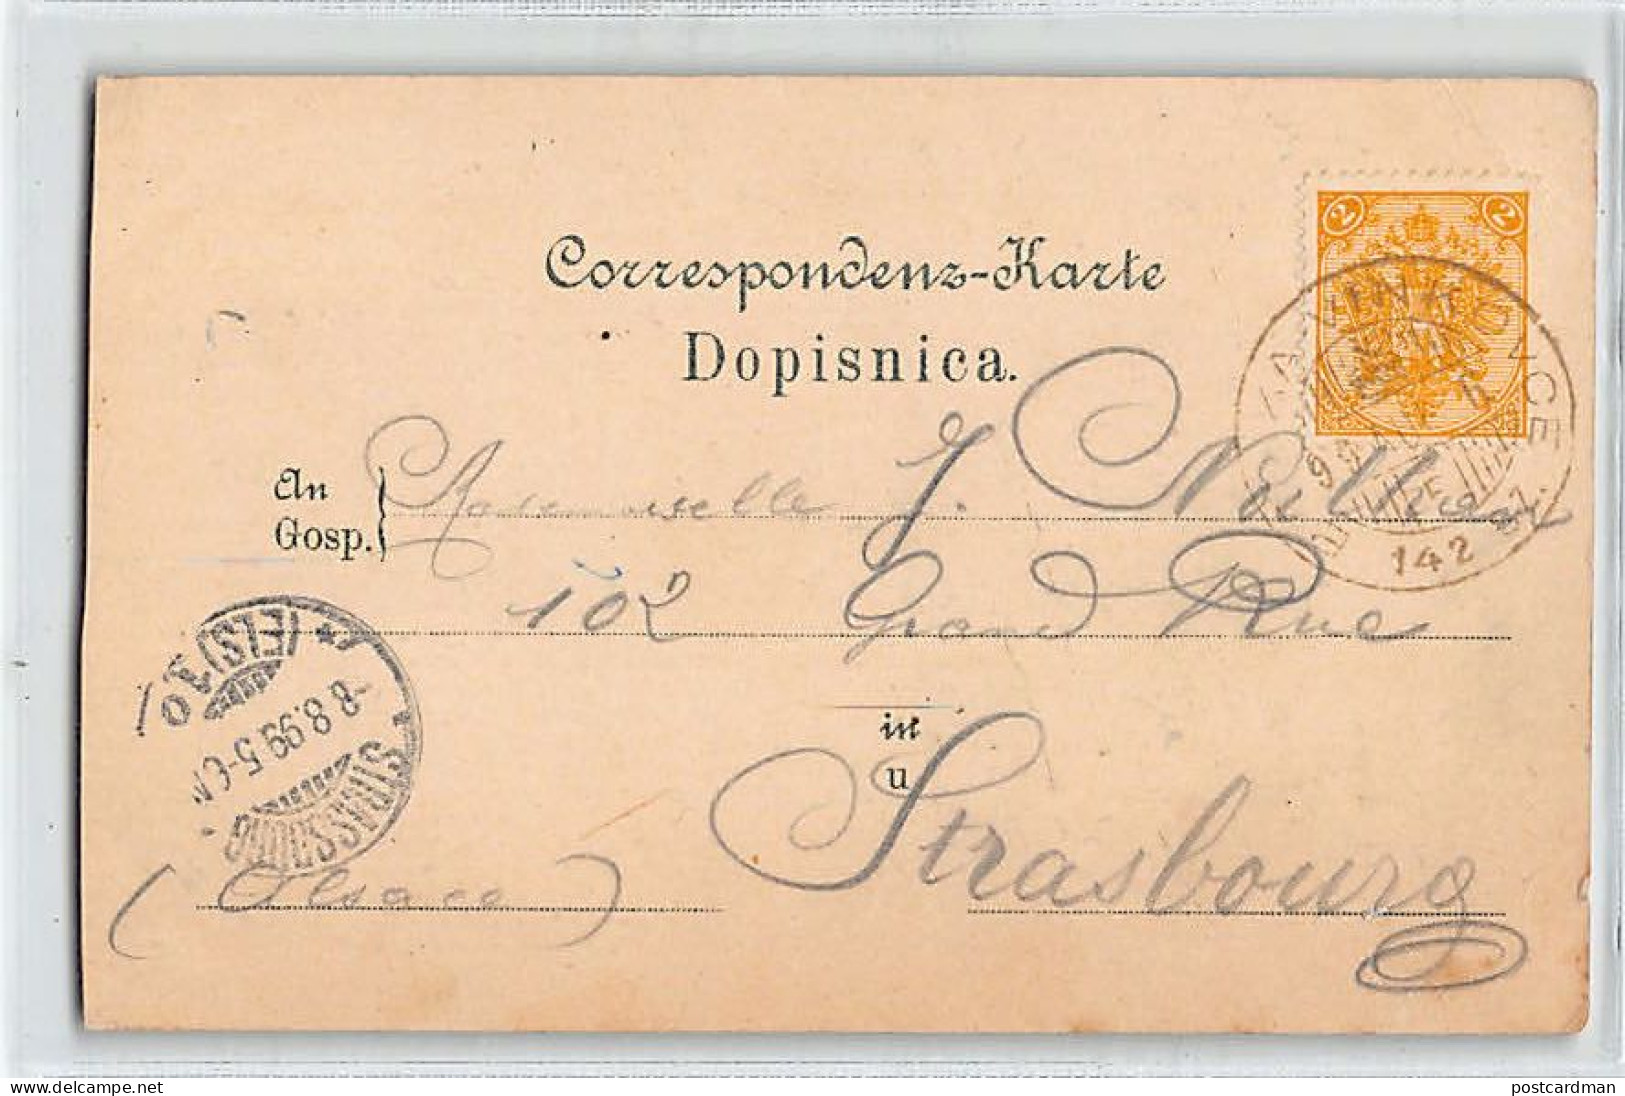 Bosnia - BRCKO - Litho Postcard - Year 1899 - Publ. M. Zeitler. - Bosnia And Herzegovina